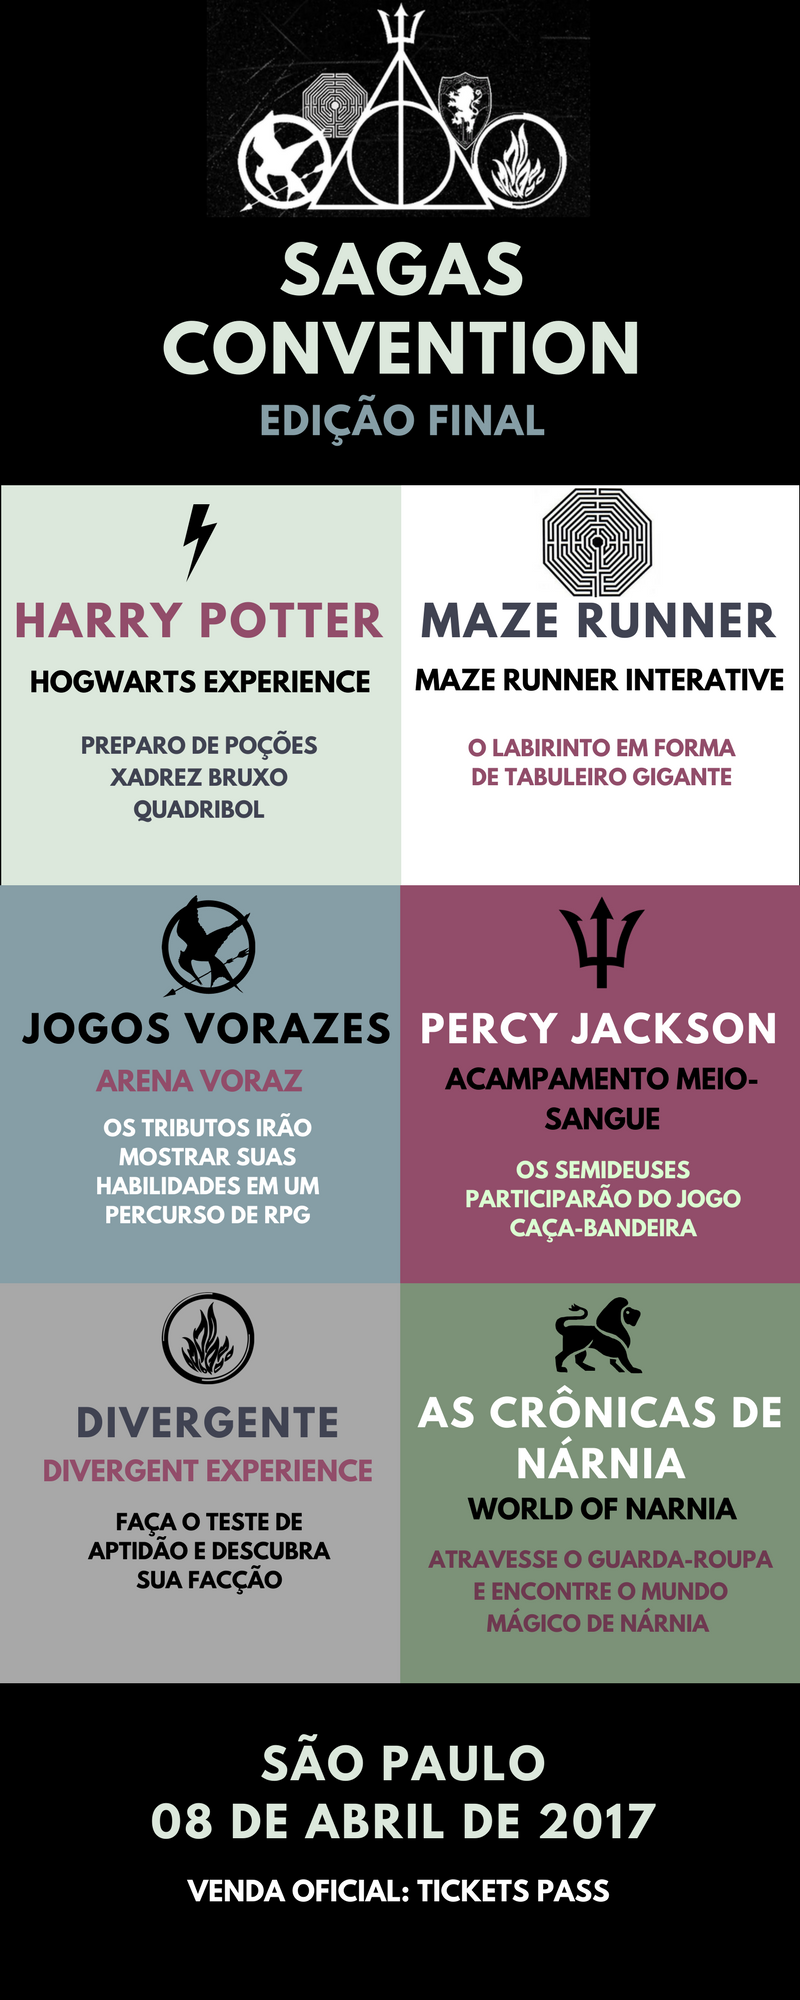 Harry Potter: Conjunto de Xadrez inspirado nas casas de Hogwarts